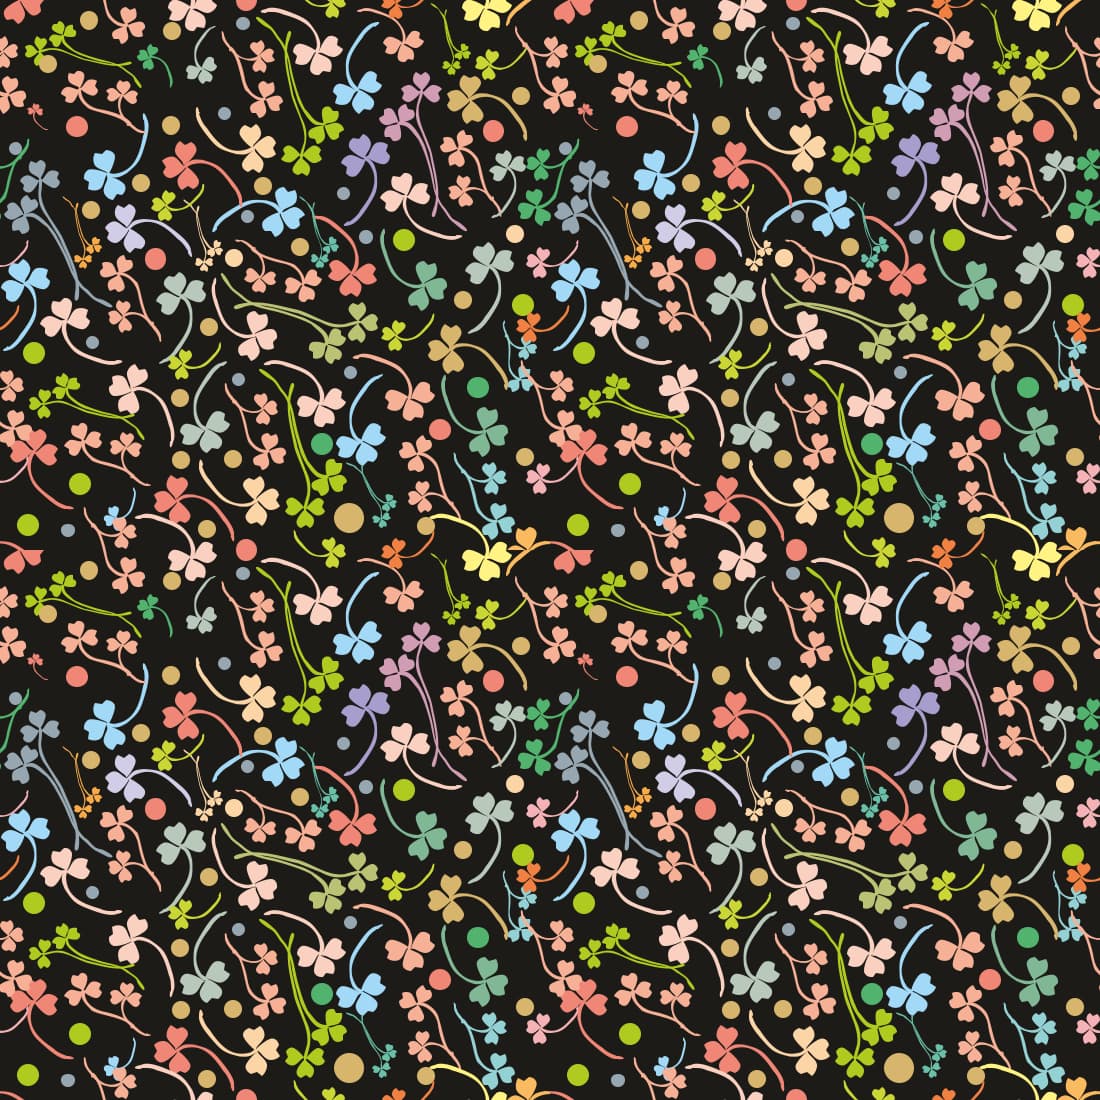 Flora-Pattern-Design cover image.